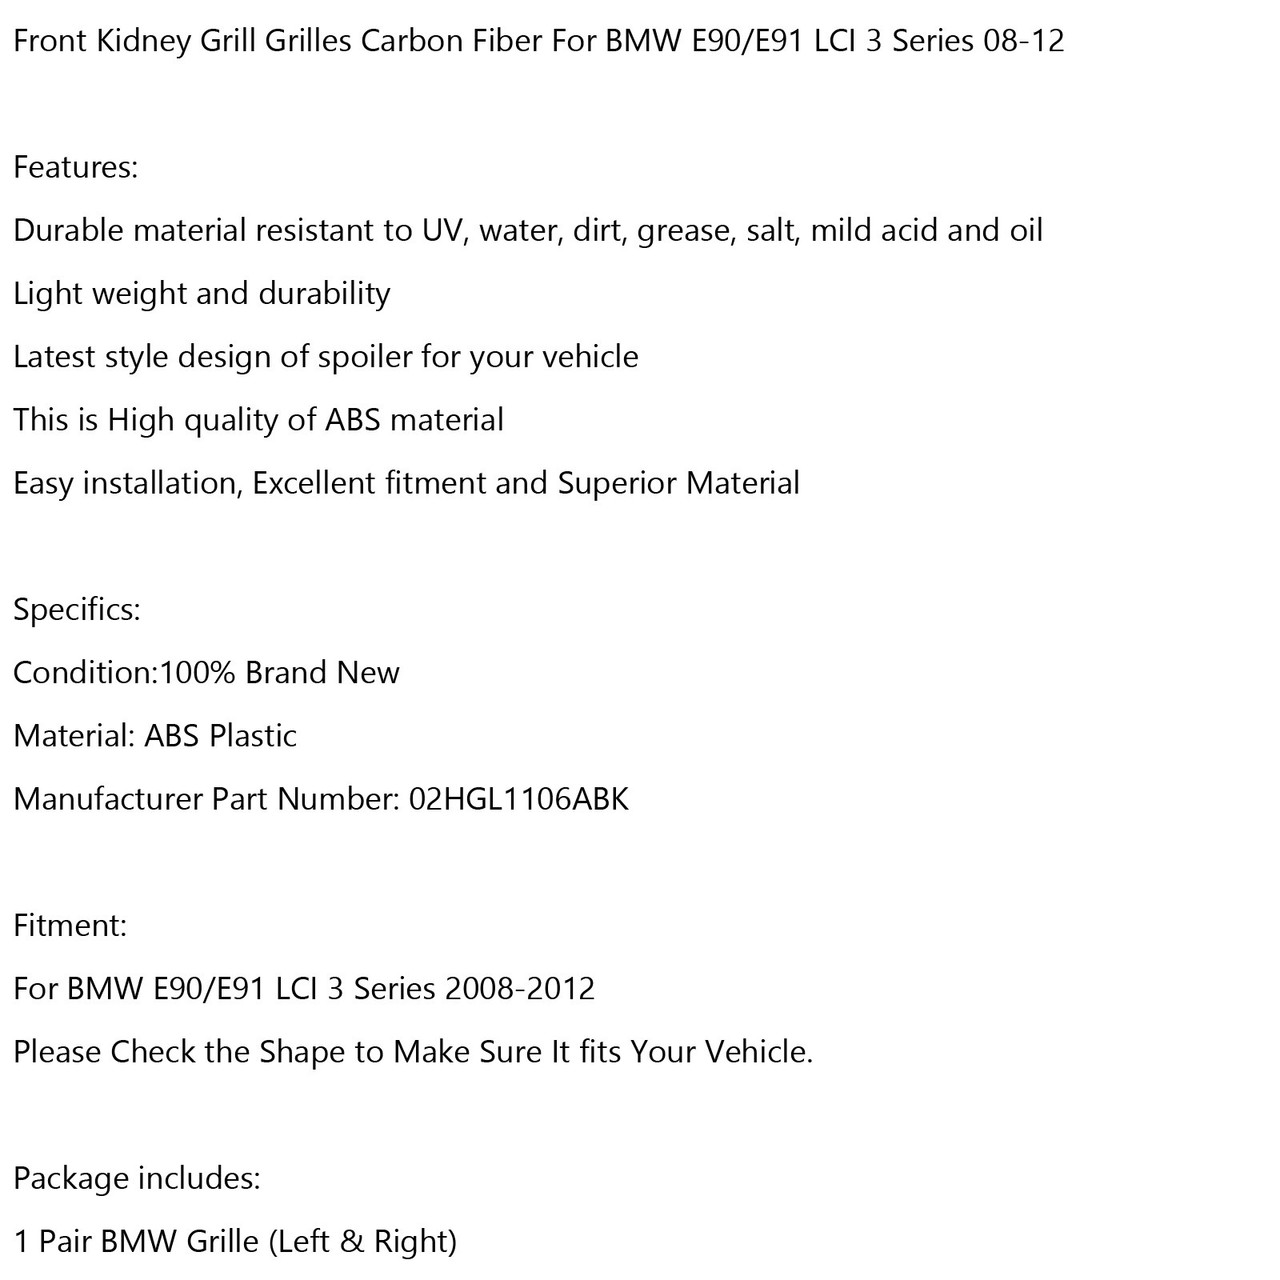 Front Kidney Grill Grilles Carbon Fiber Fit For BMW E90/E91 LCI 3 Series 2008-2012